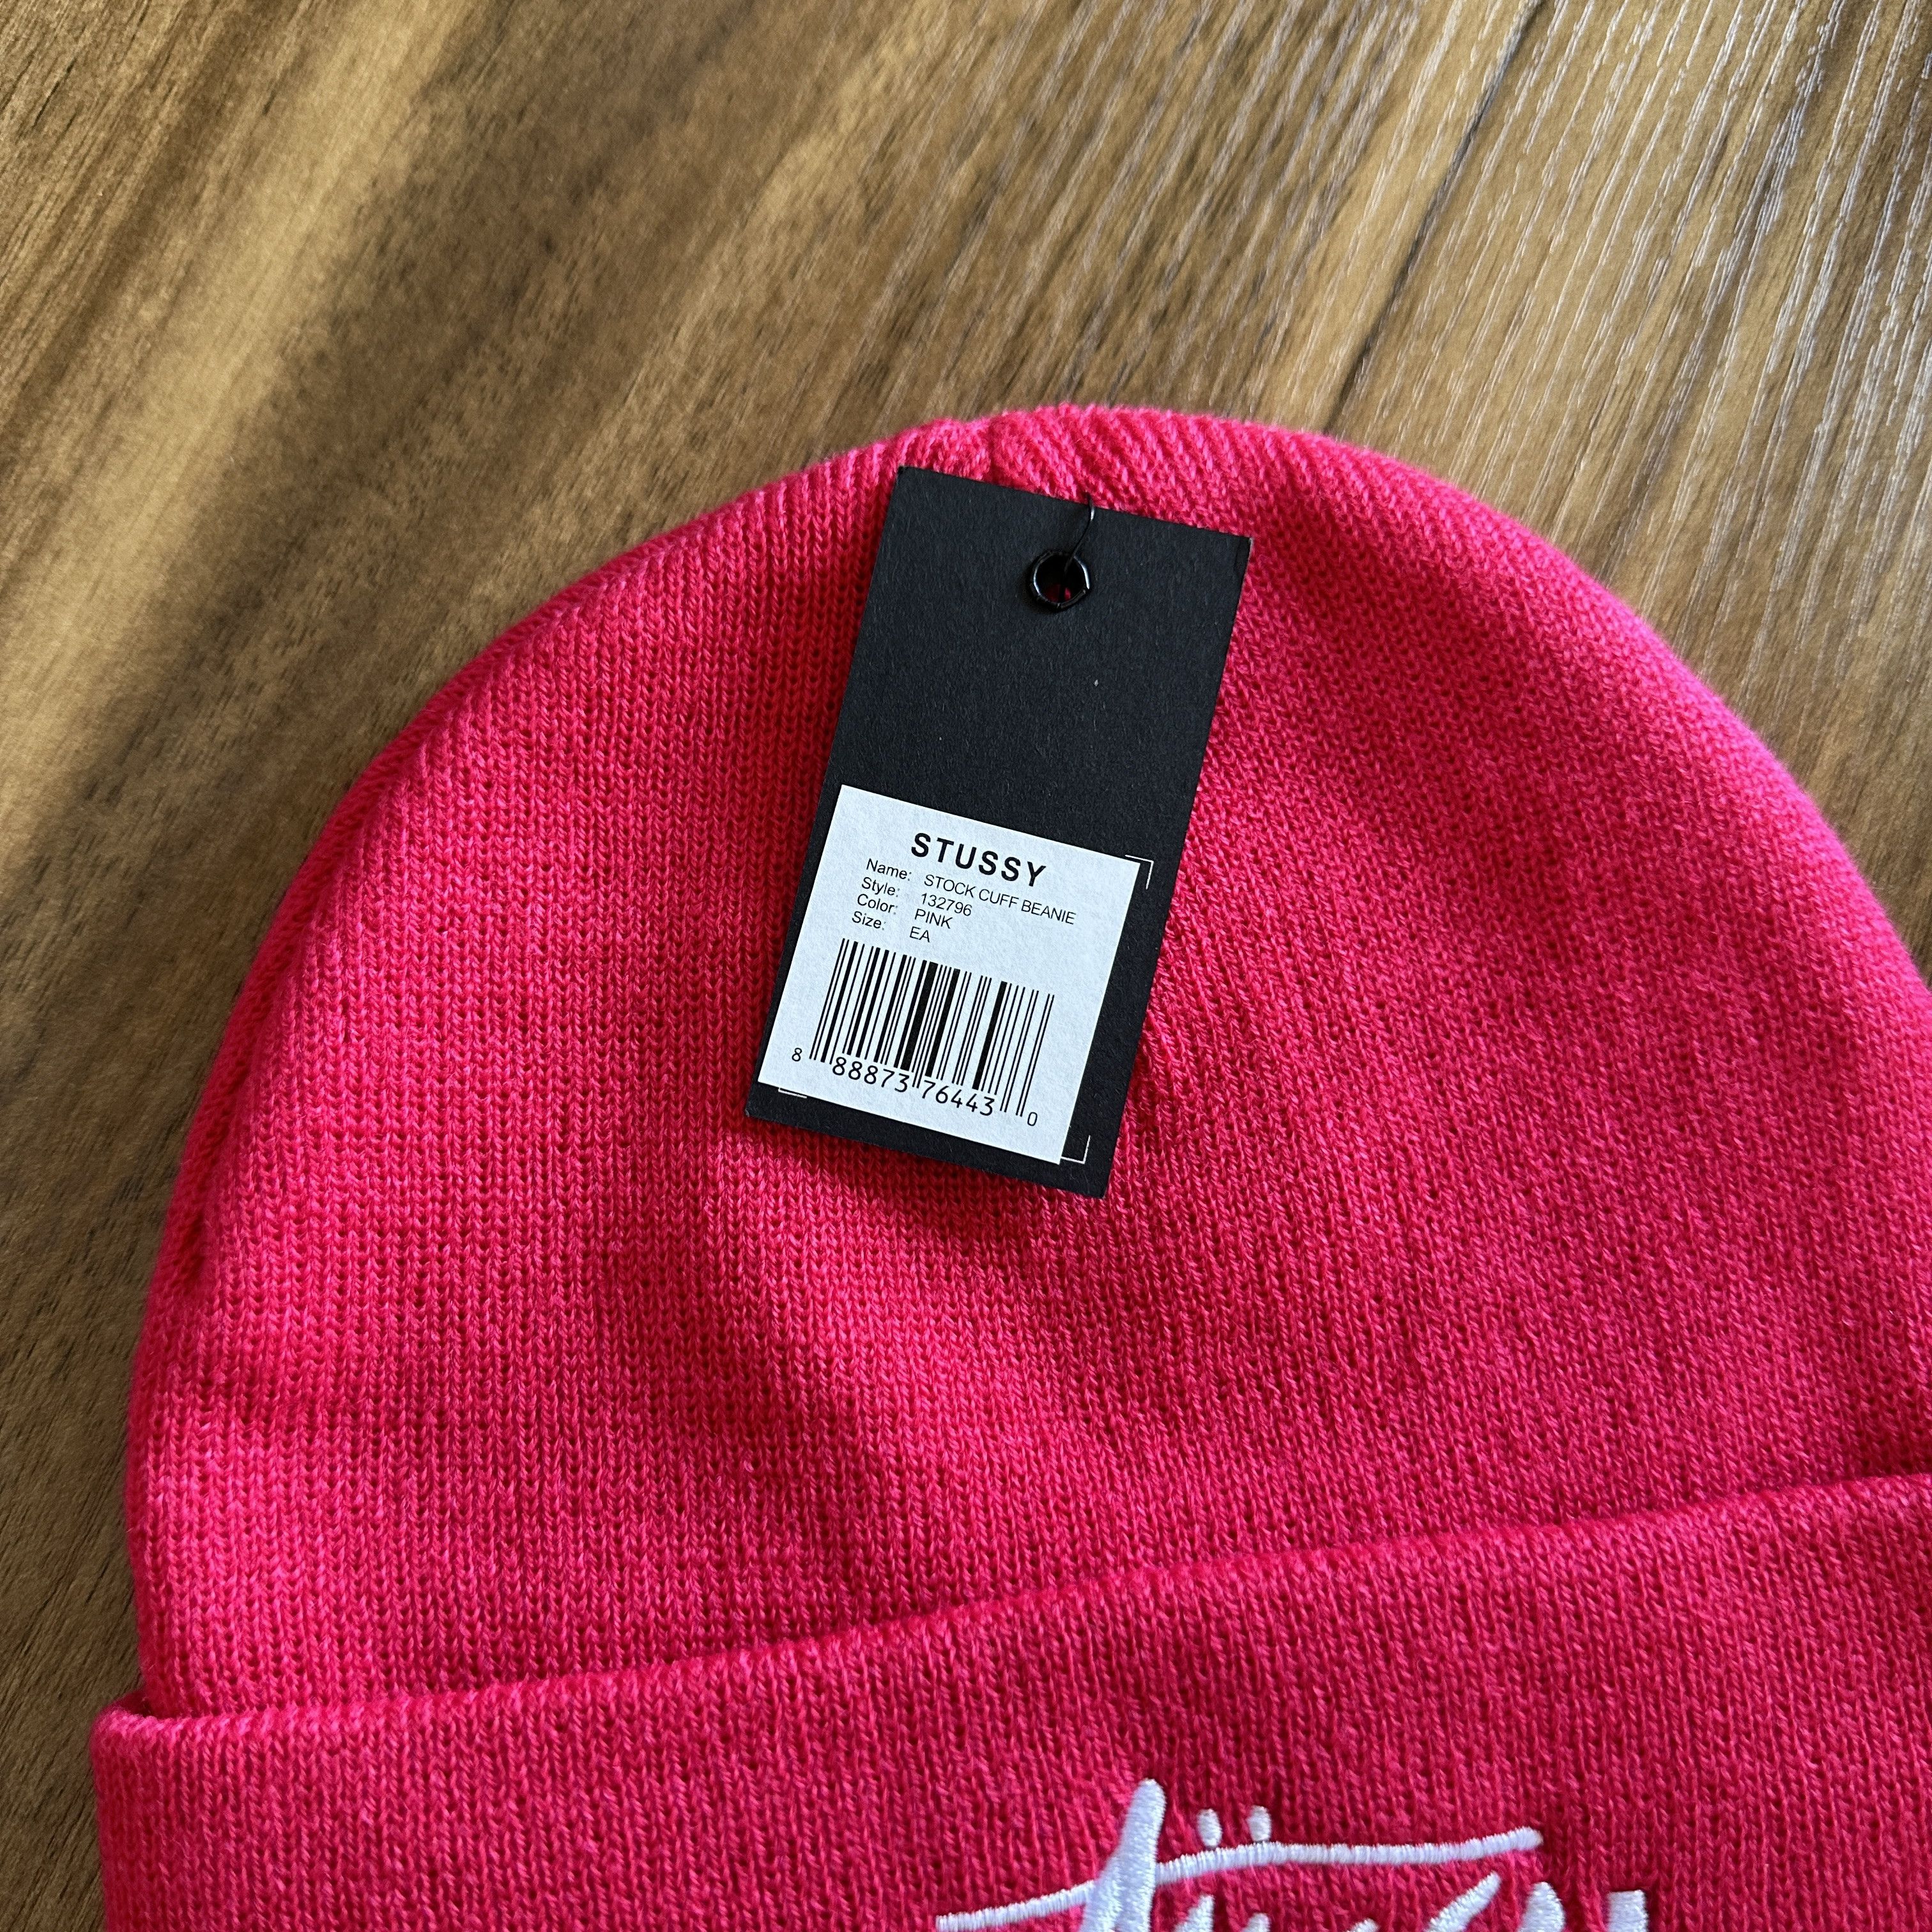 stussy beanie hat pink - 5